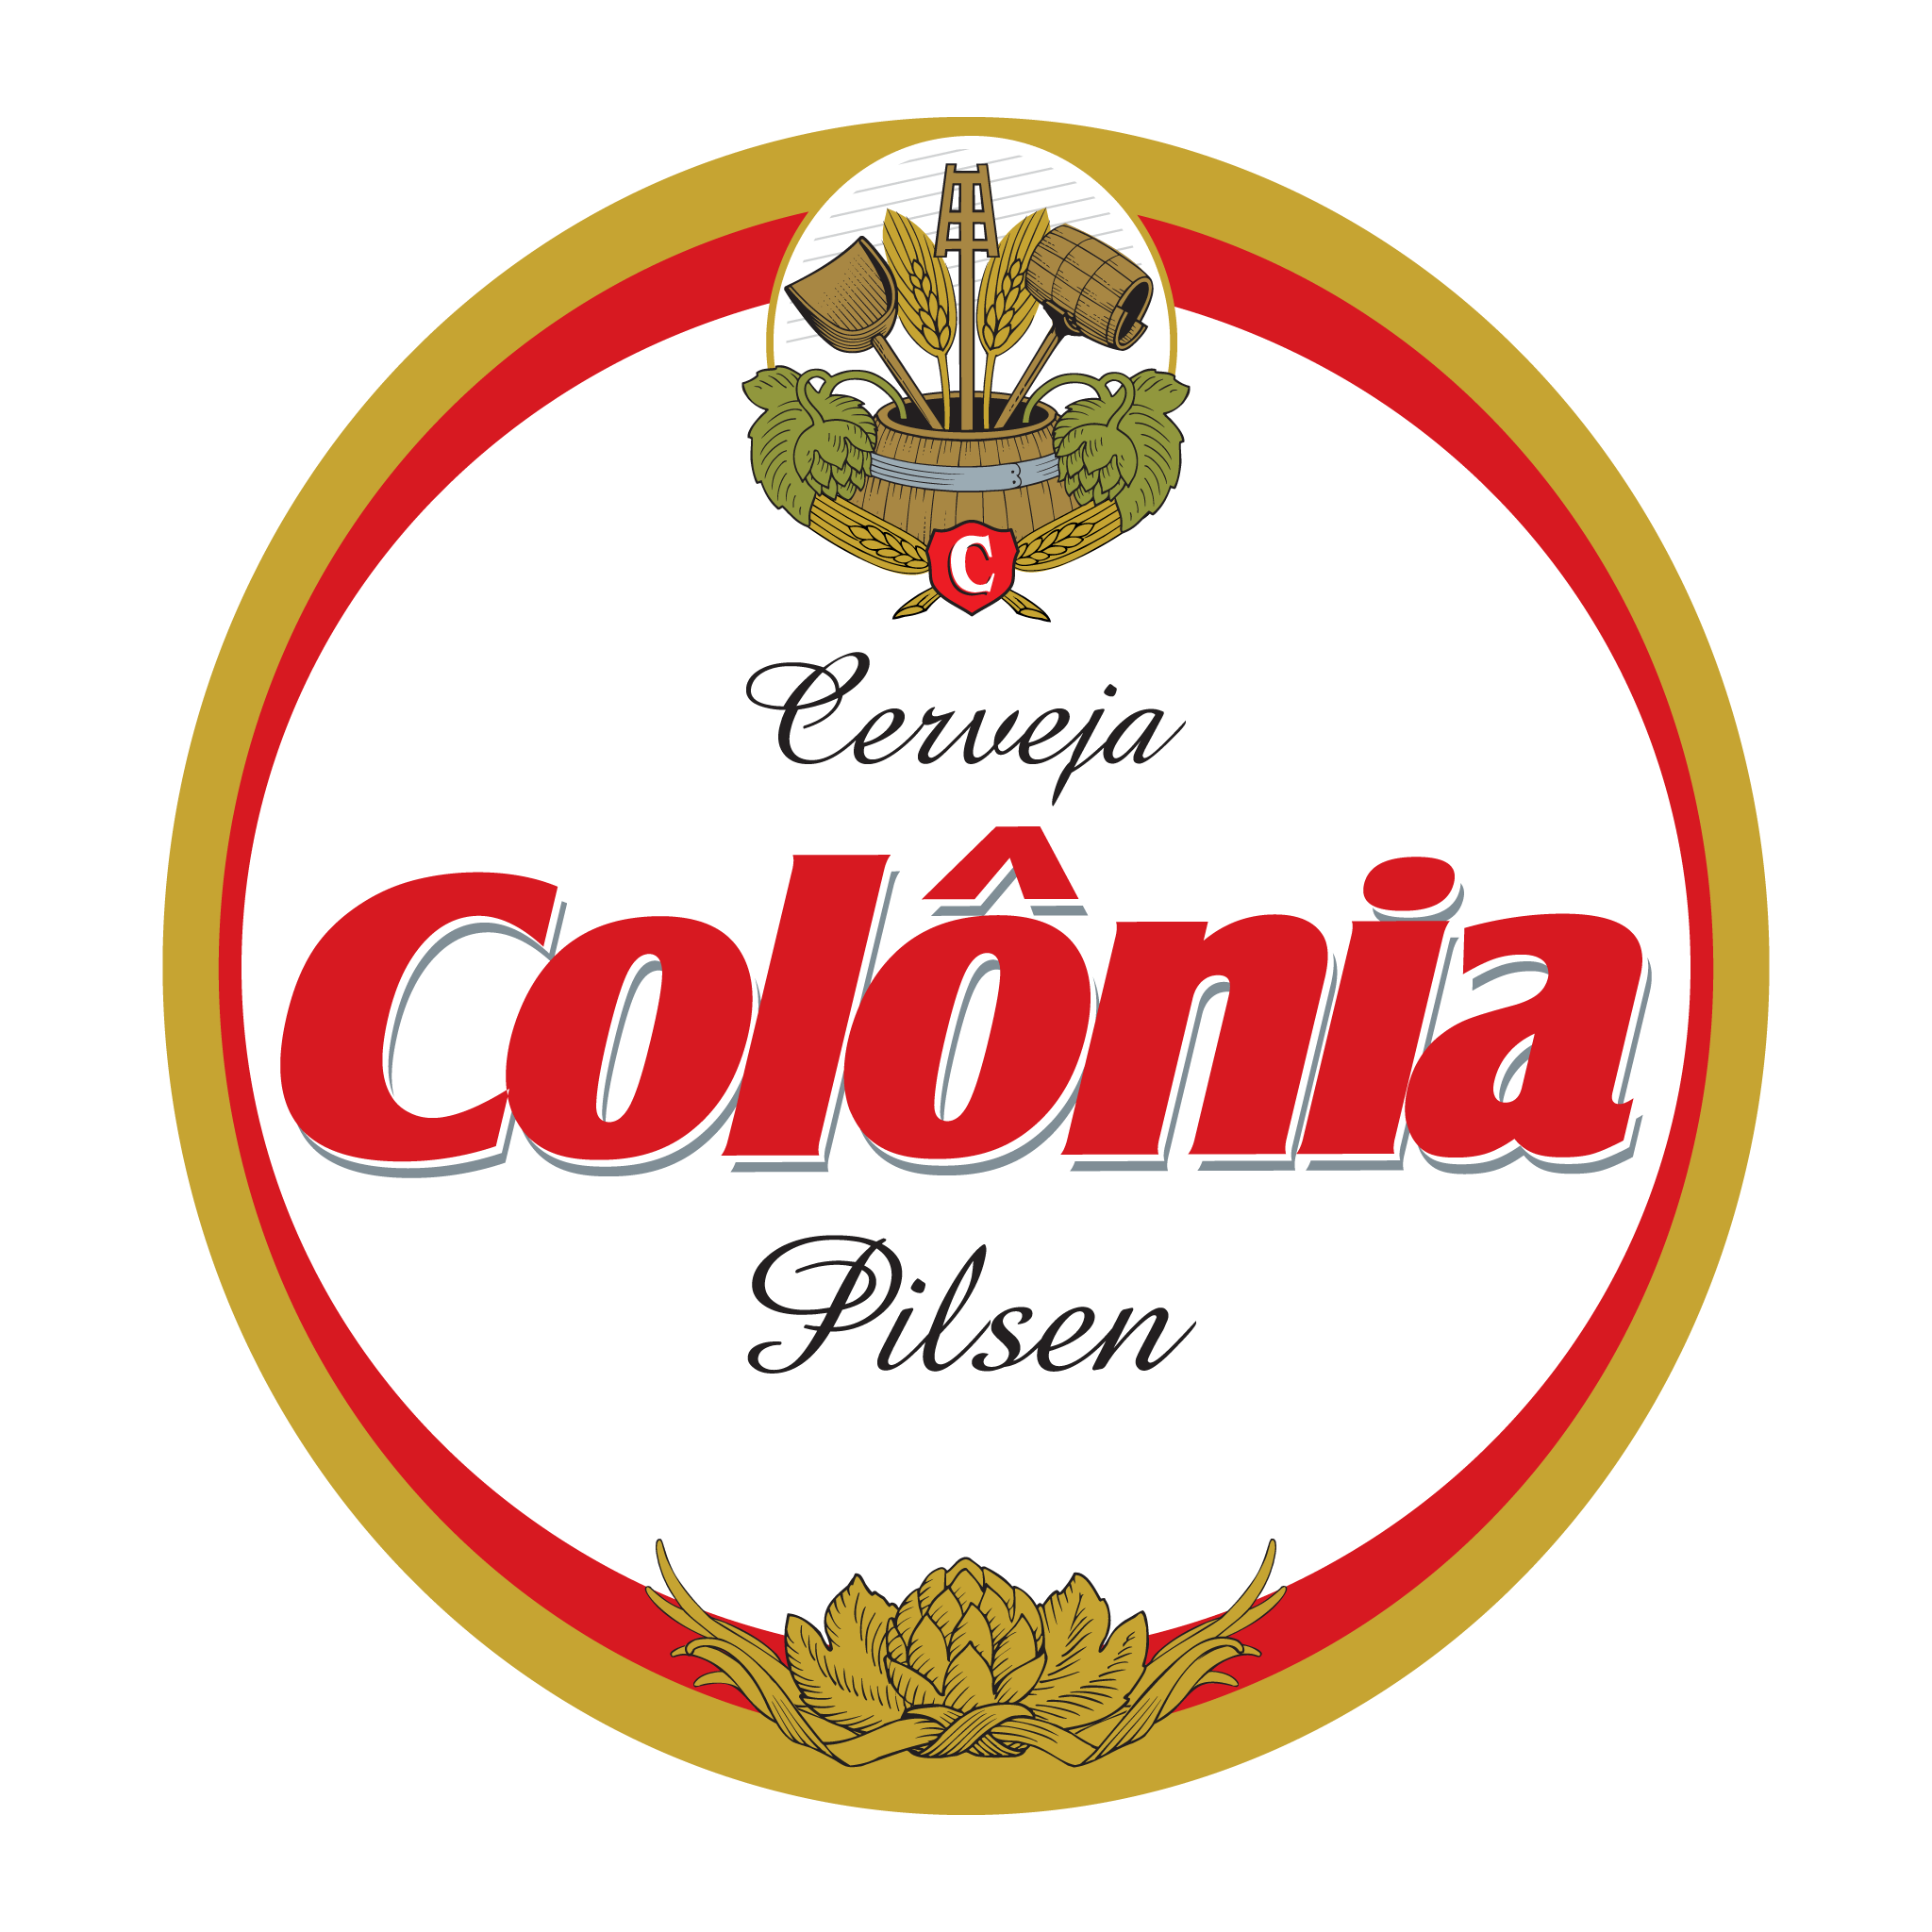 brasao do cerveja colonia